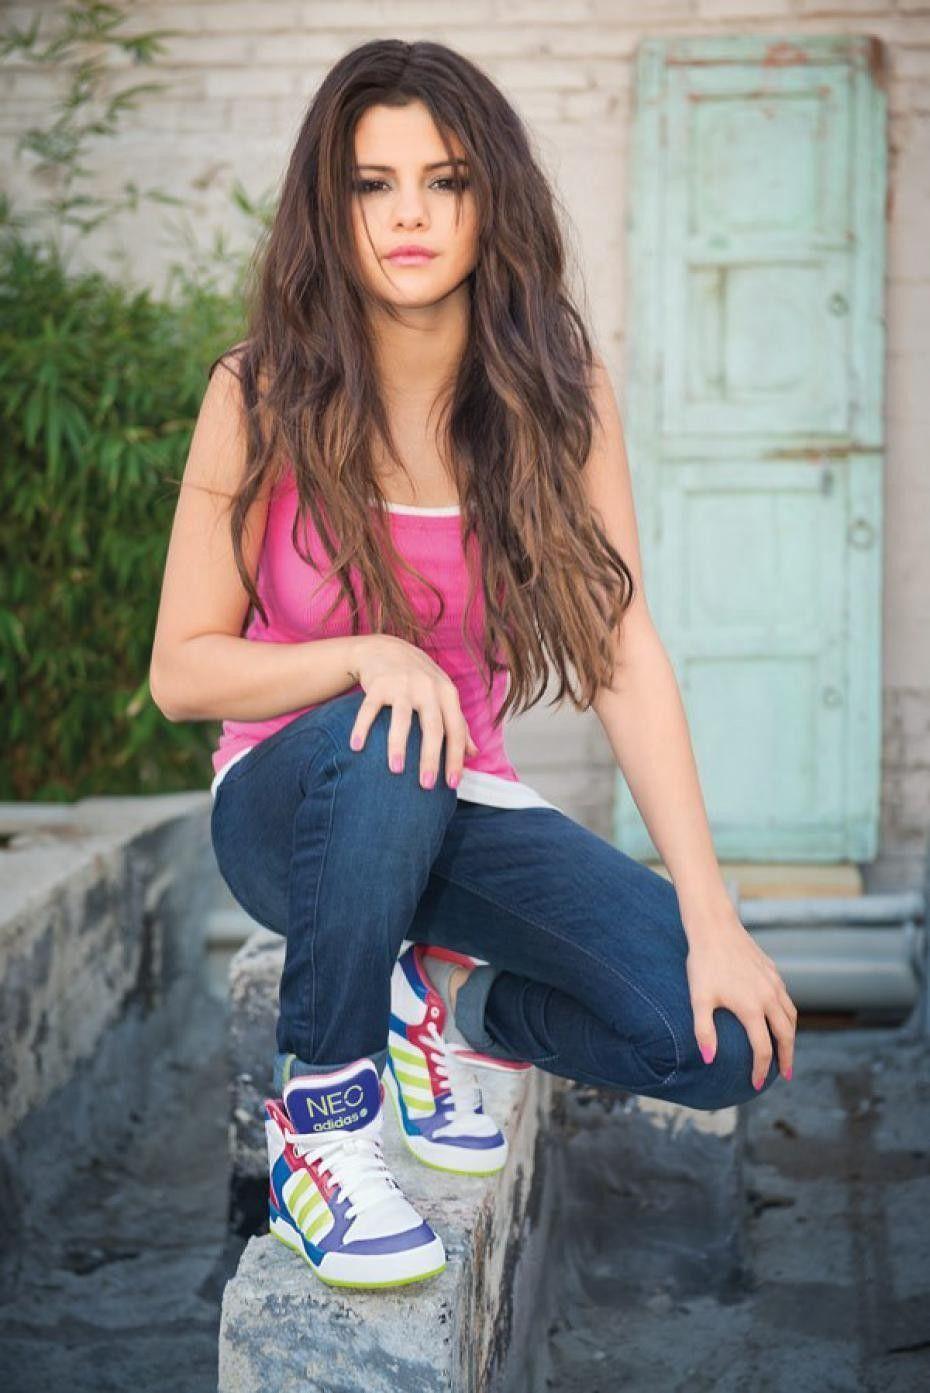 Latest Image of Selena Gomez. Download New Wallpaper HD Selena